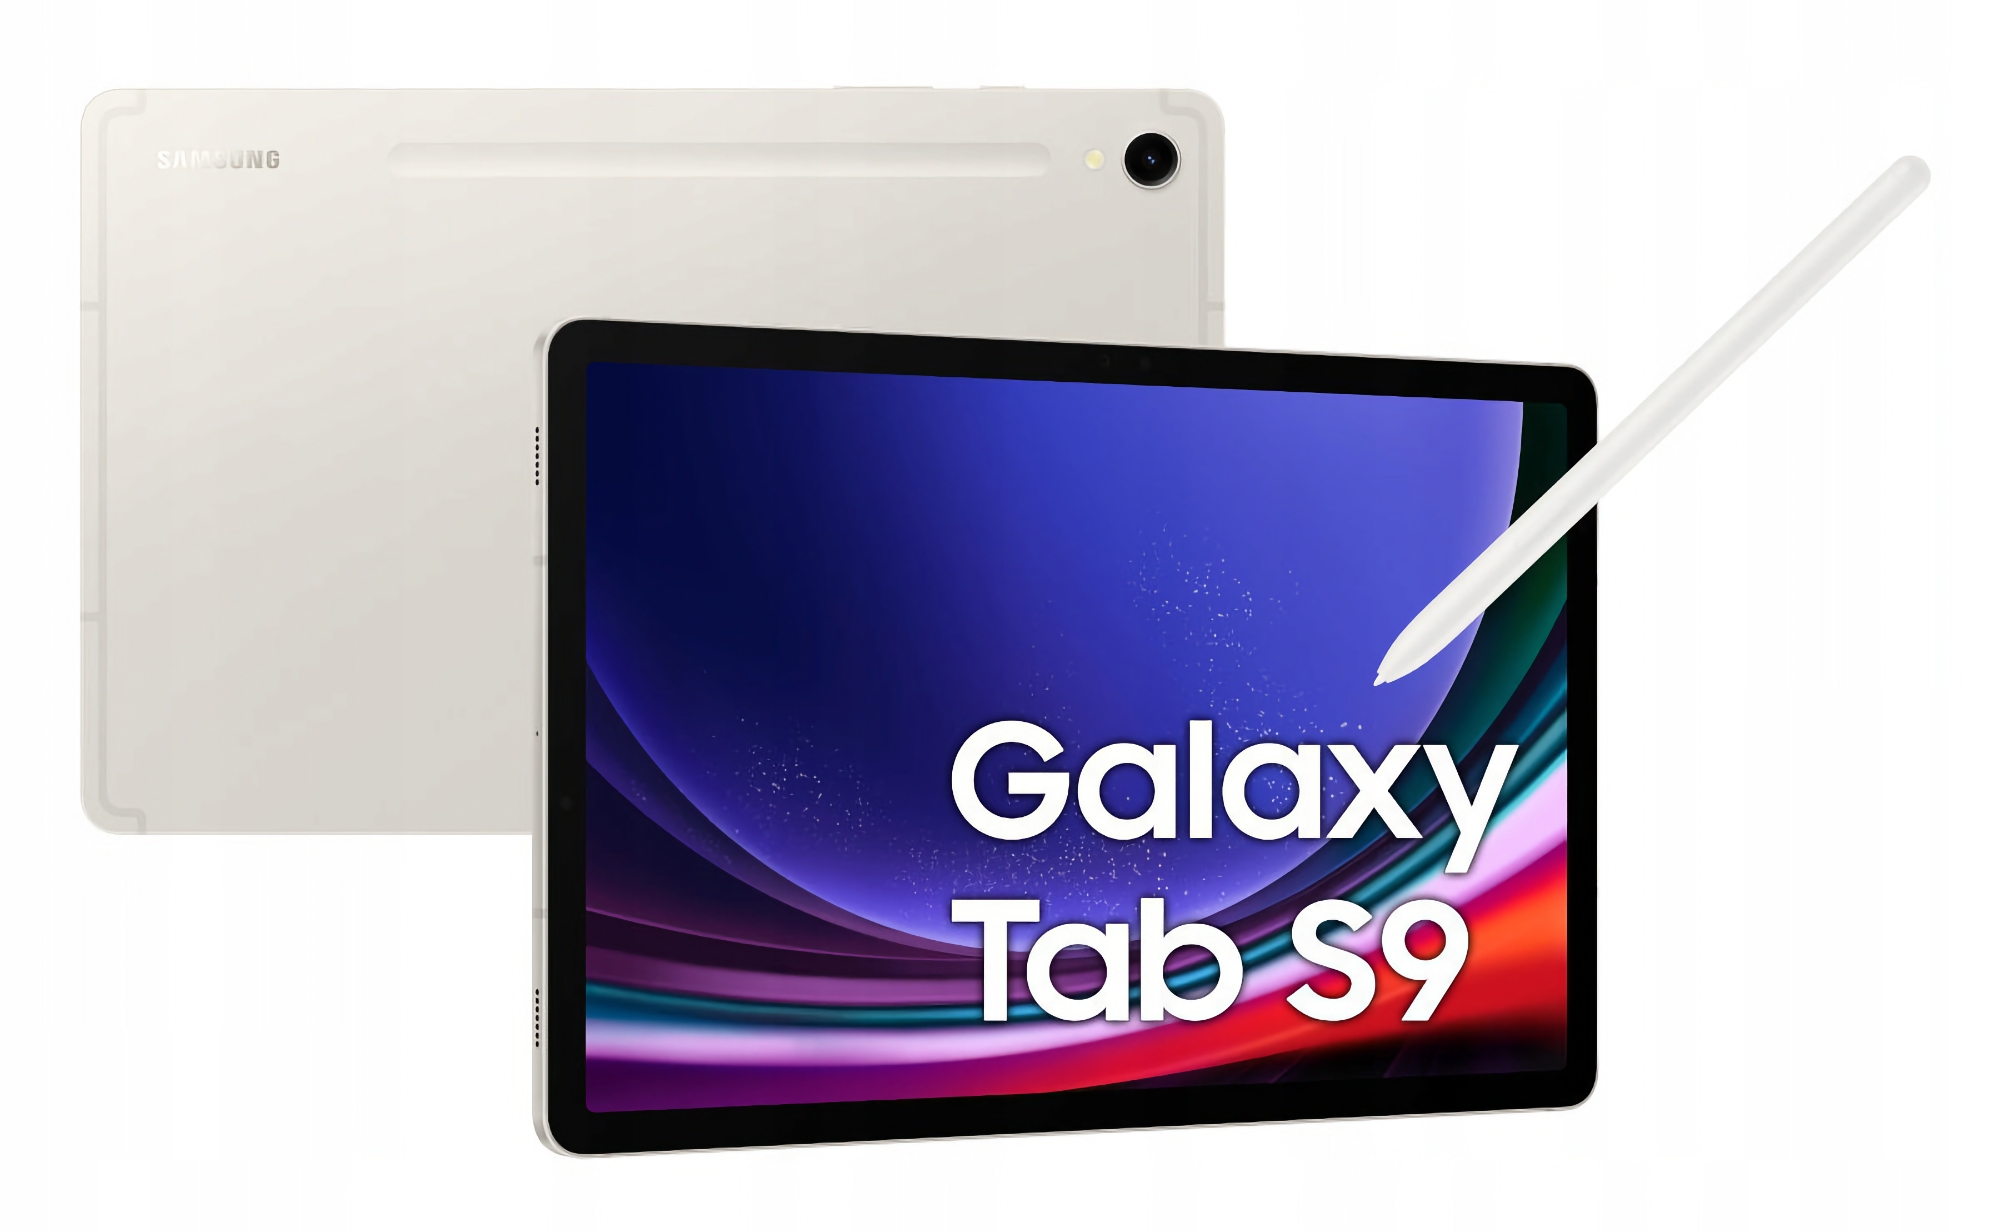 Samsung Galaxy Tab S9 med 256 GB lagerplads kan købes på Amazon med en rabat på $166